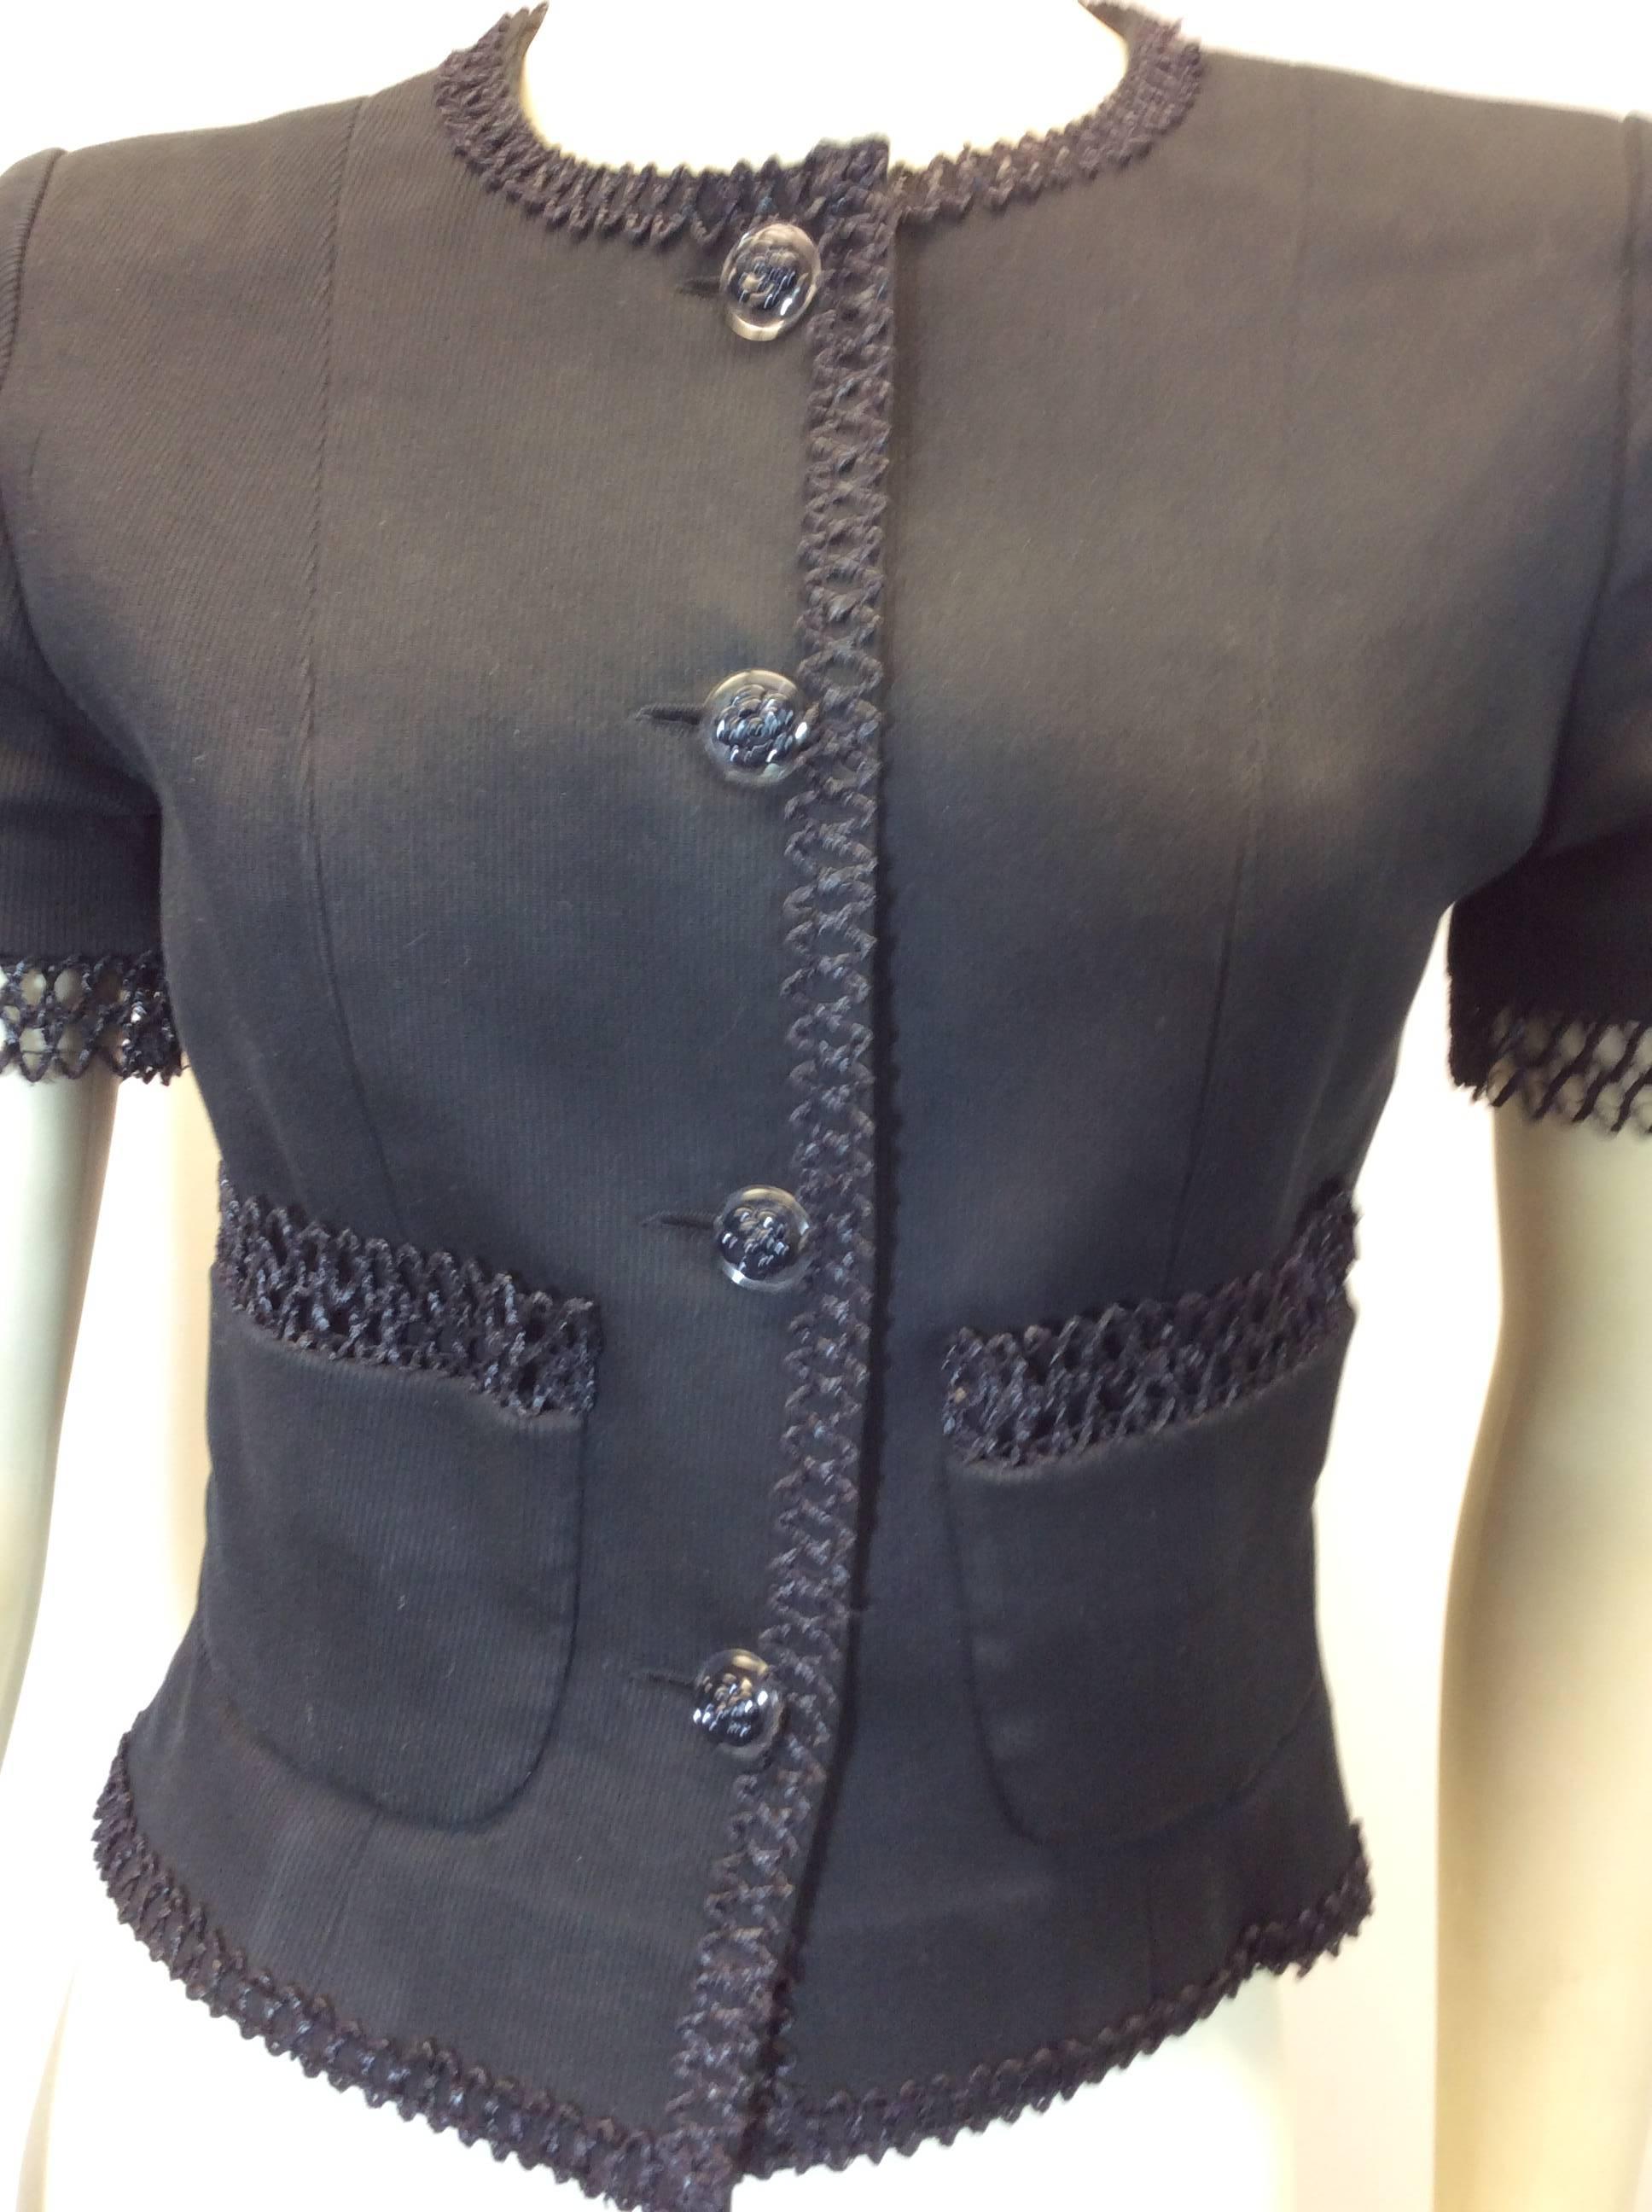 Chanel Black Short Sleeve Button Up Blazer
Size 36
$399
Cotton and Elastane
Trim detailing